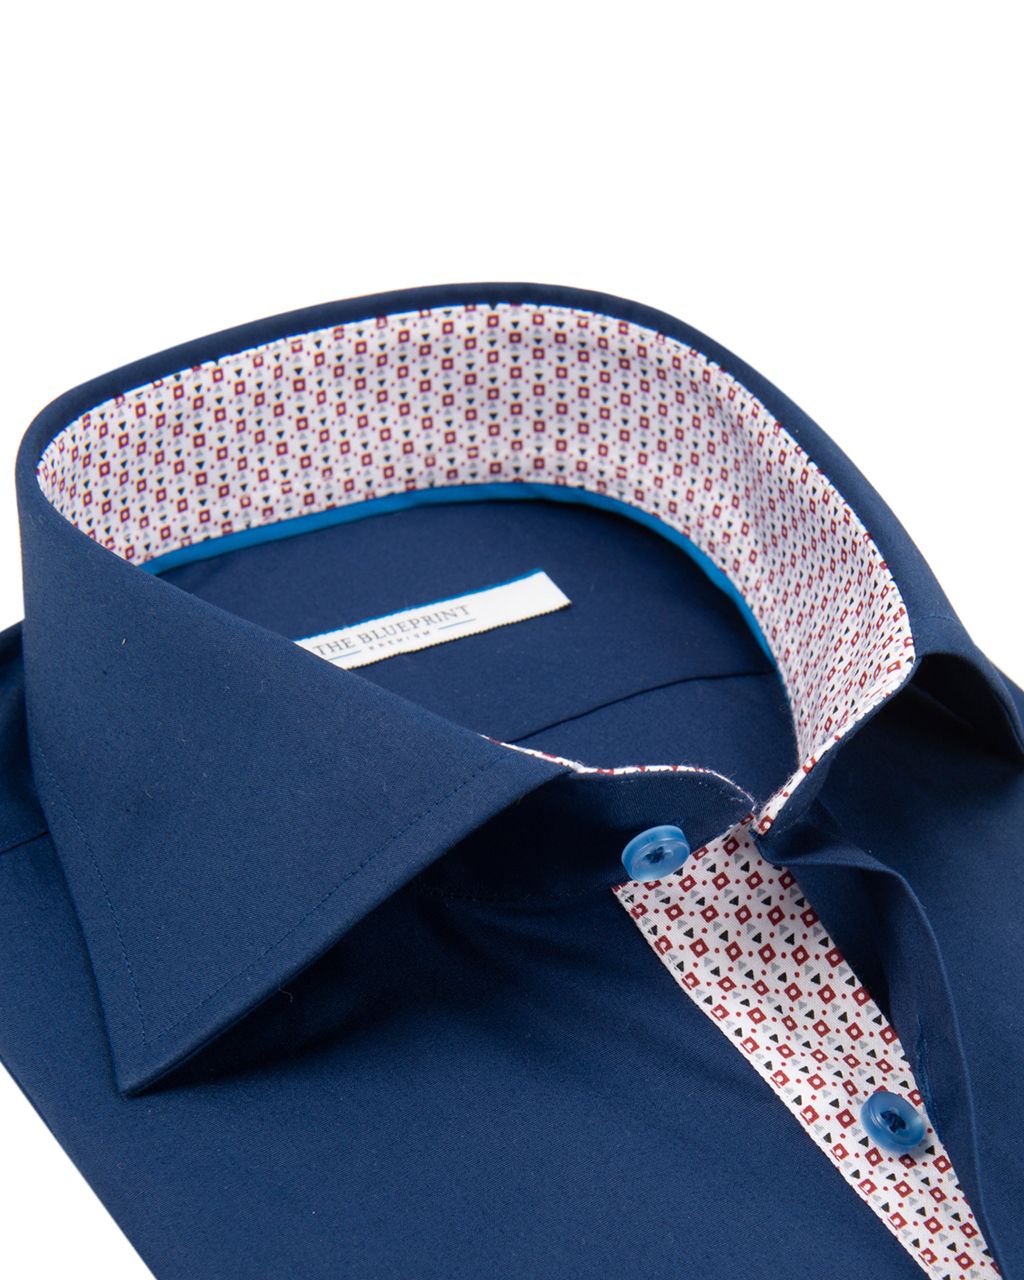 The BLUEPRINT Premium Trendy overhemd LM Donkerblauw uni 057800-001-L